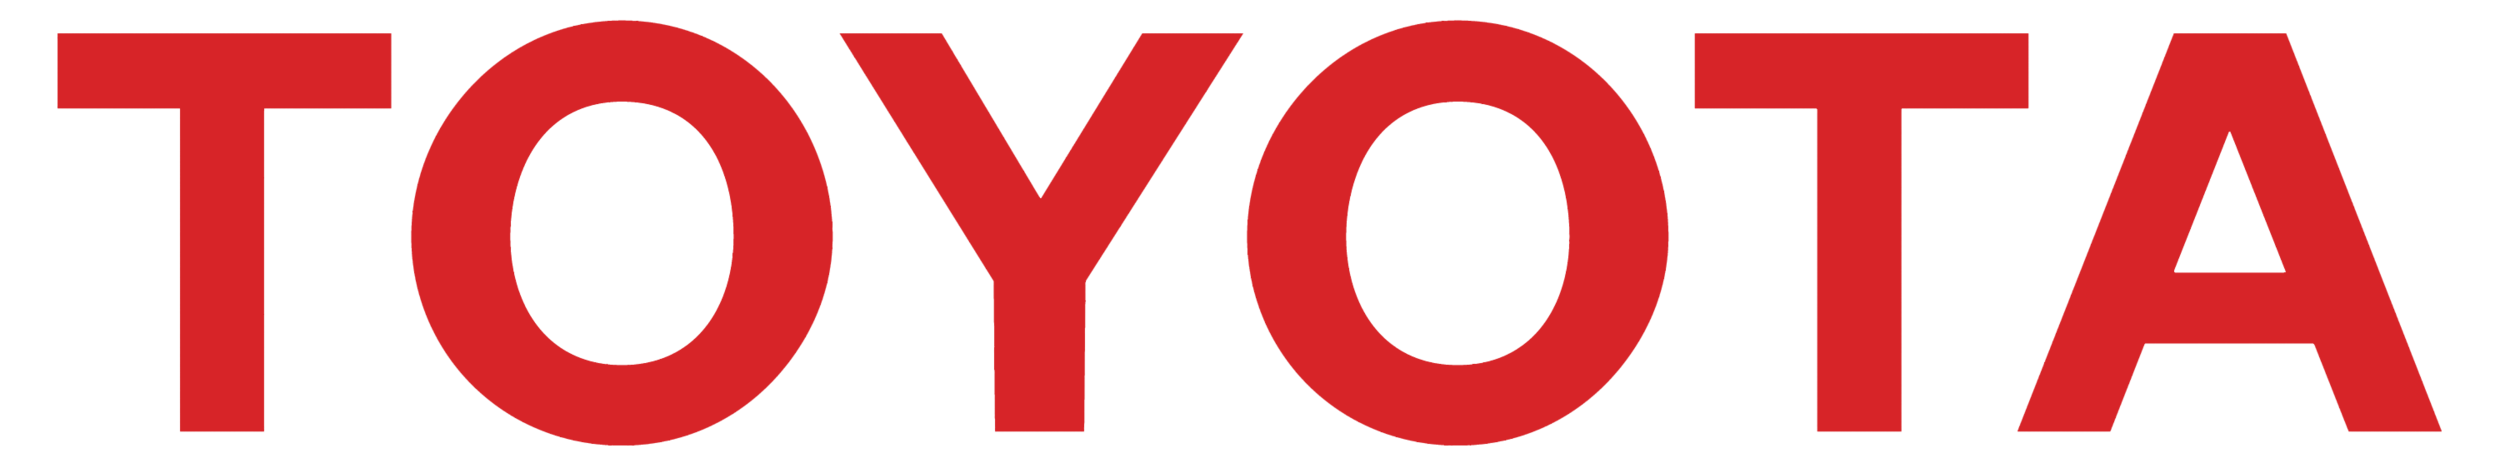 Toyota-text-logo-3000x550.png